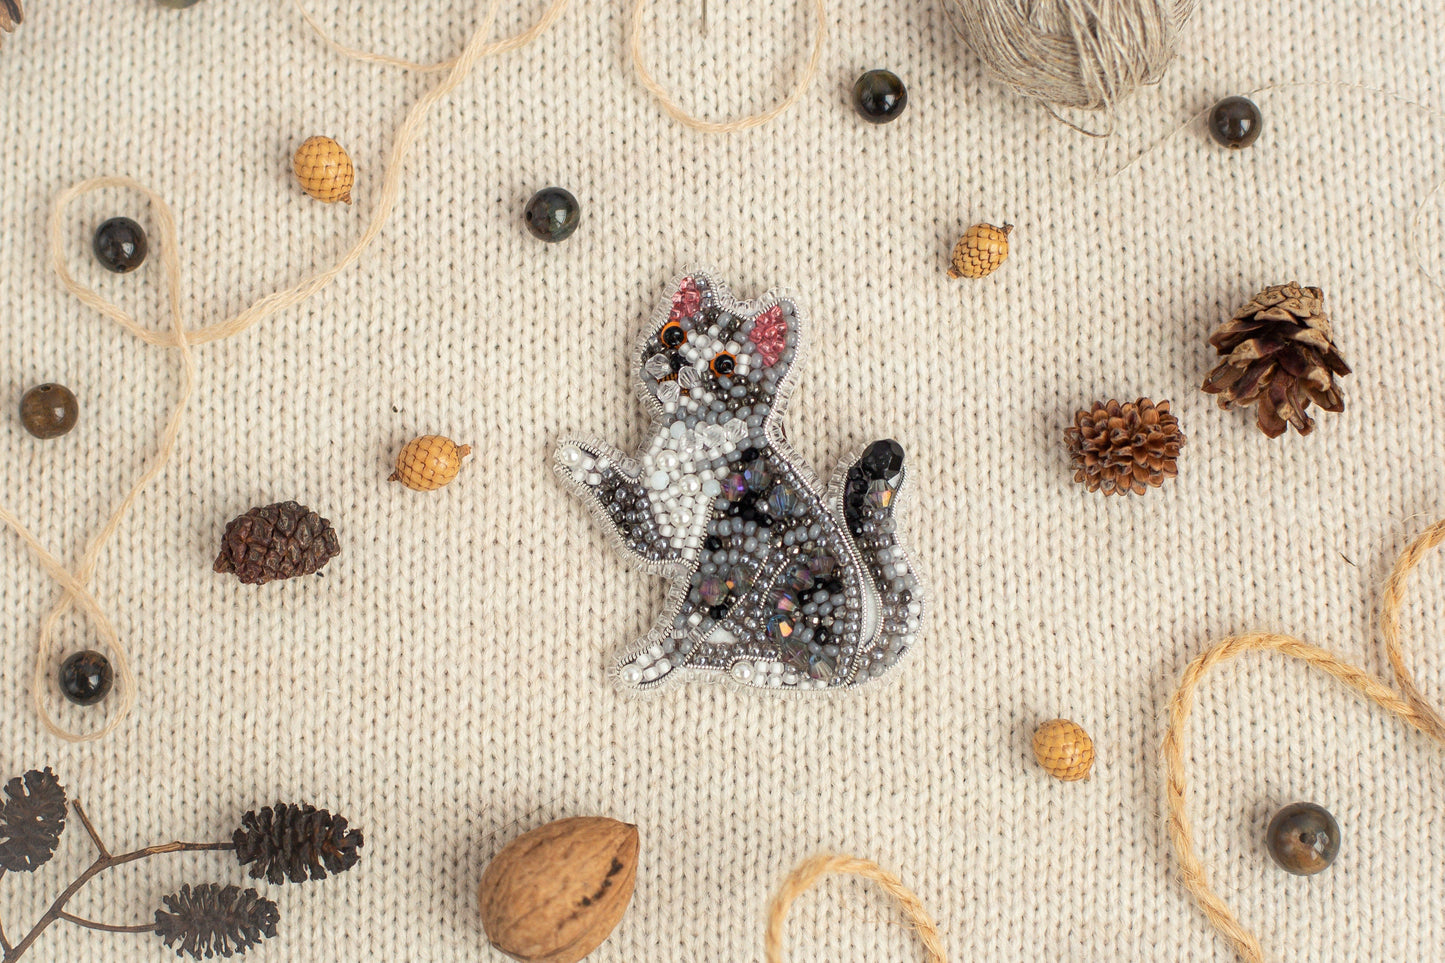 Gray Tabby Cat Bead embroidery kit. Seed Bead Brooch kit. DIY Craft kit. Beadweaving Kit. Needlework beading. Handmade Jewelry Making Kit